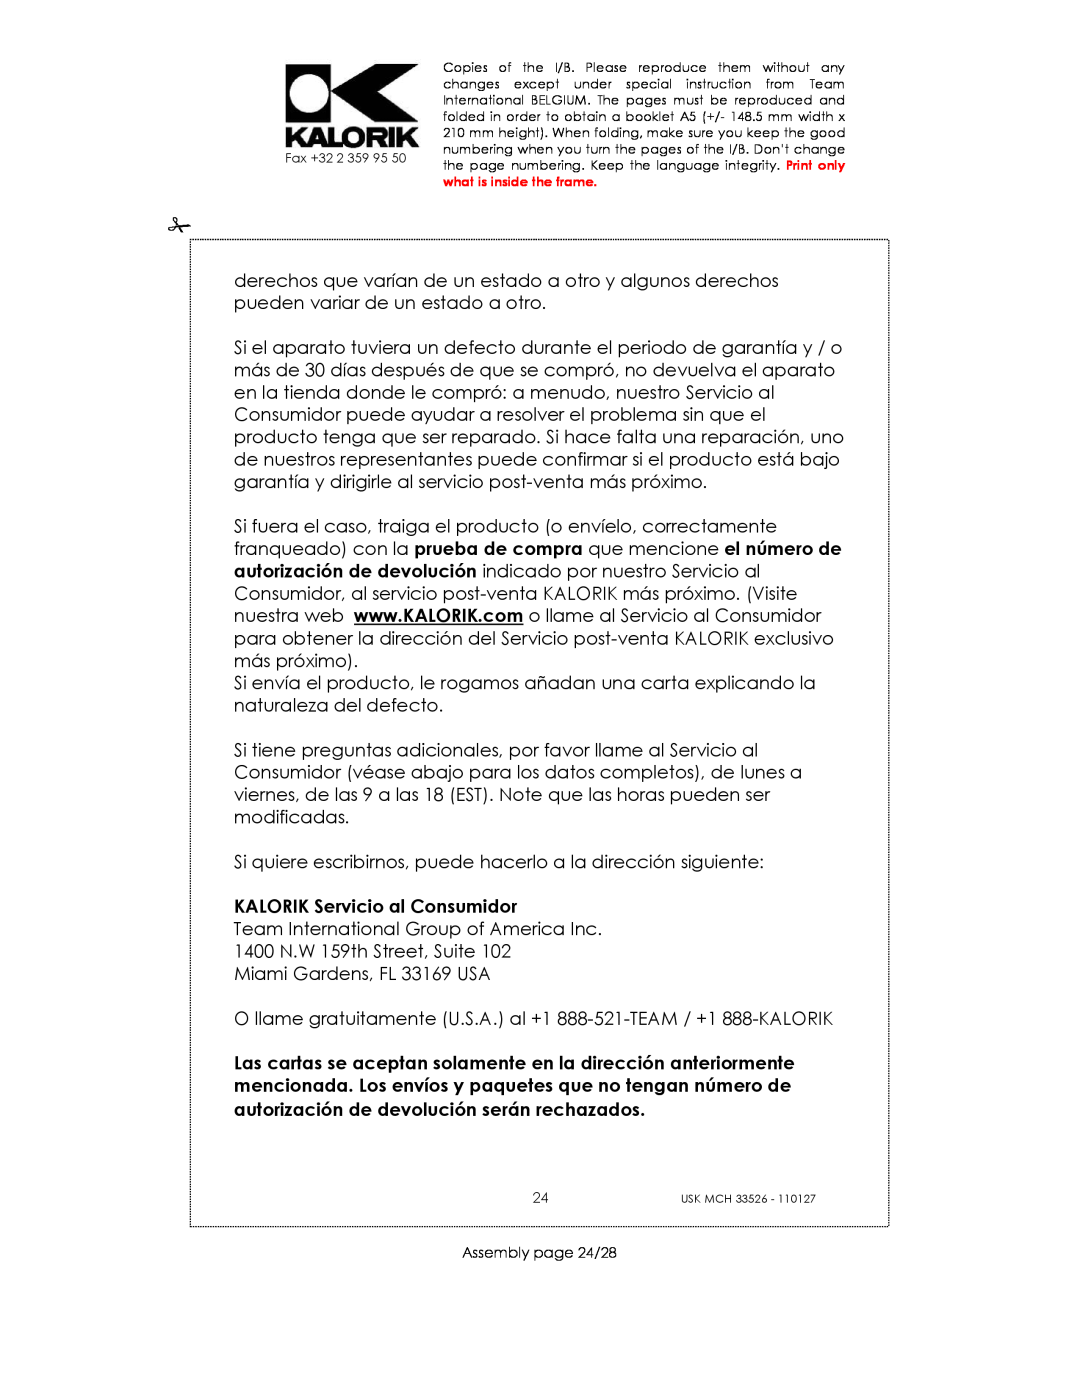 Kalorik USK MCH 33526 manual KALORIK Servicio al Consumidor, Assembly page 24/28 